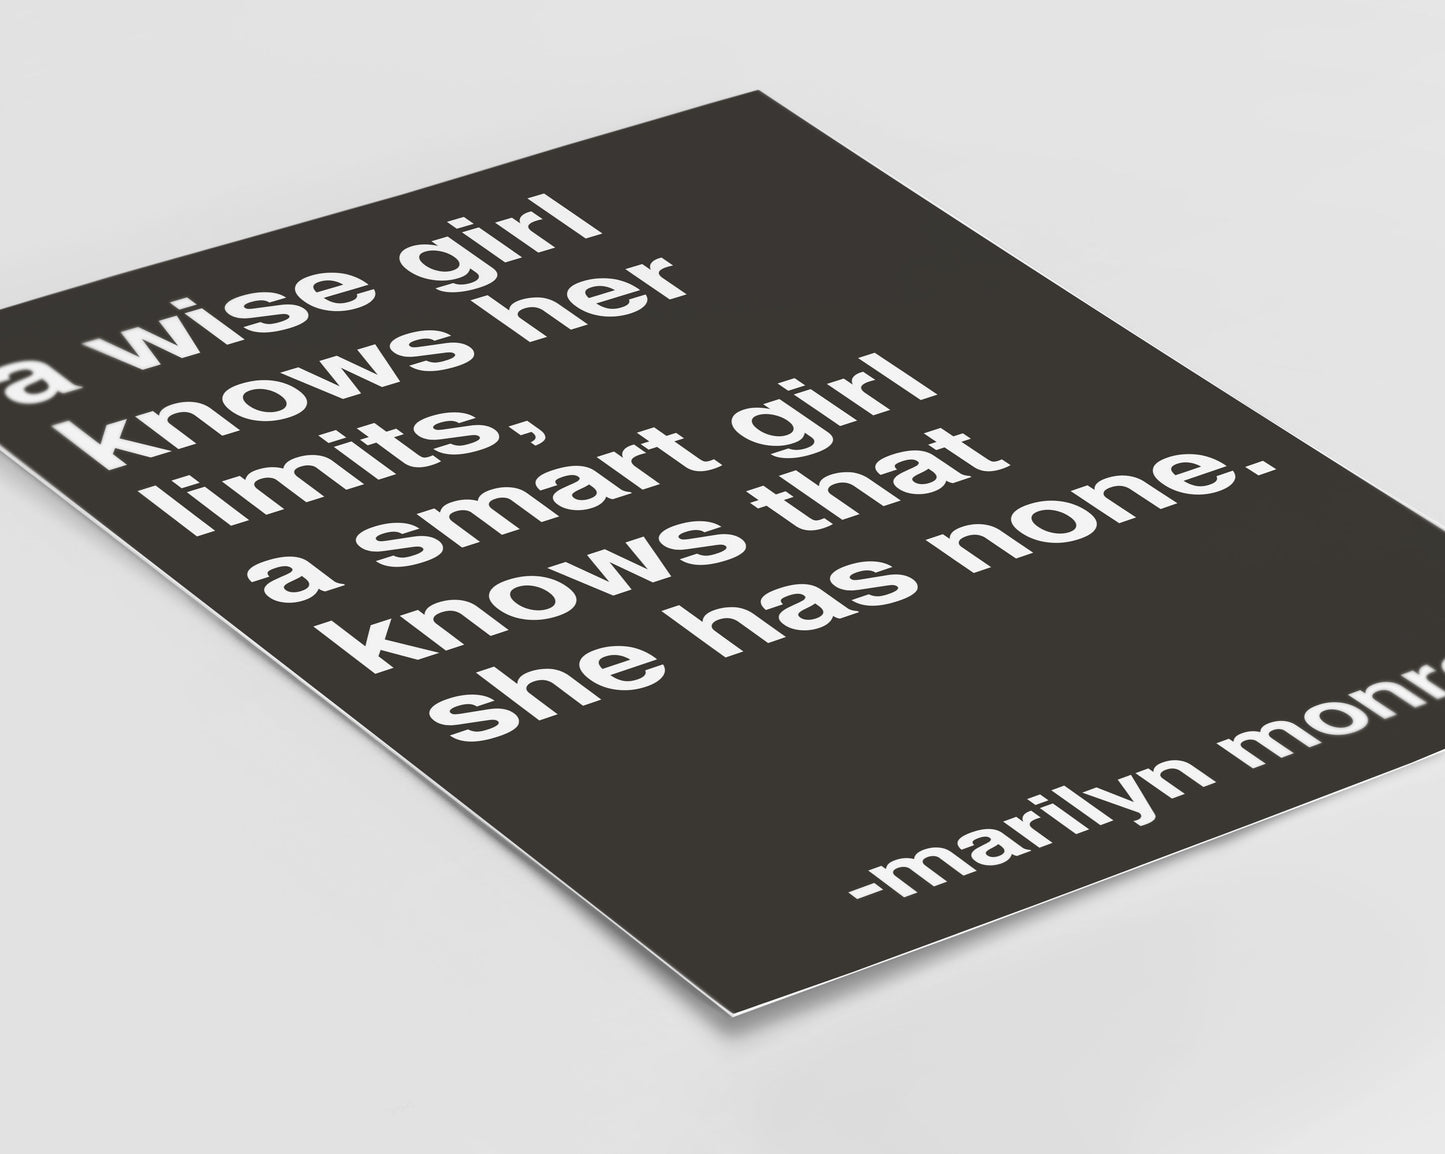 A Wise Girl Marilyn Monroe Statement Black Print